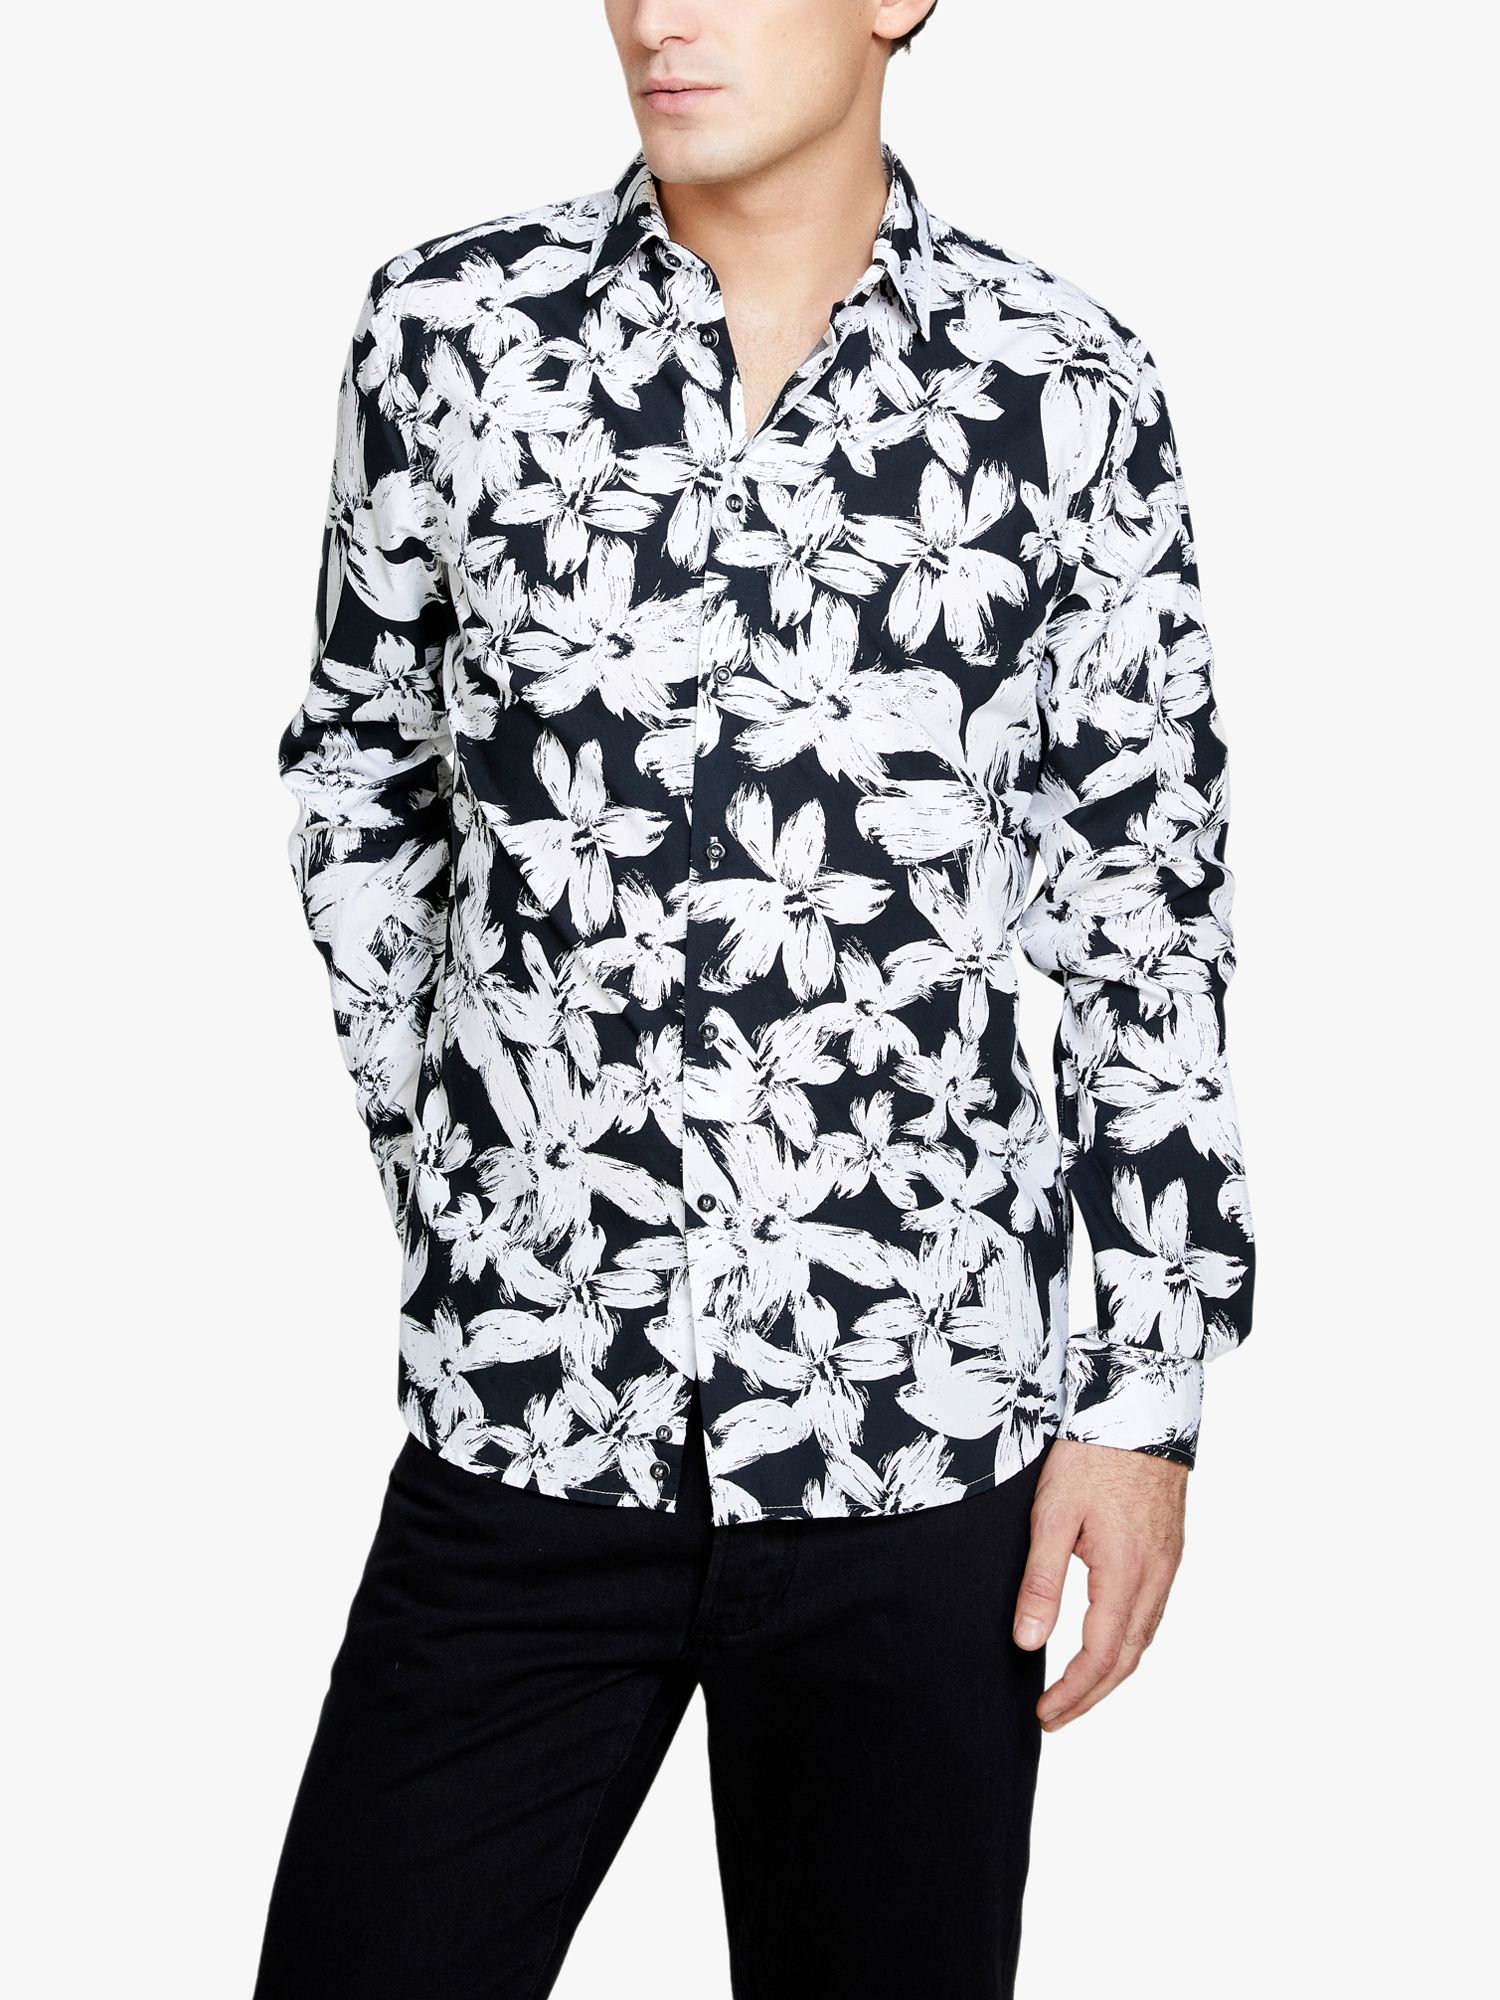 SISLEY Floral Print Cotton Poplin Shirt, Black/Multi, 16.5